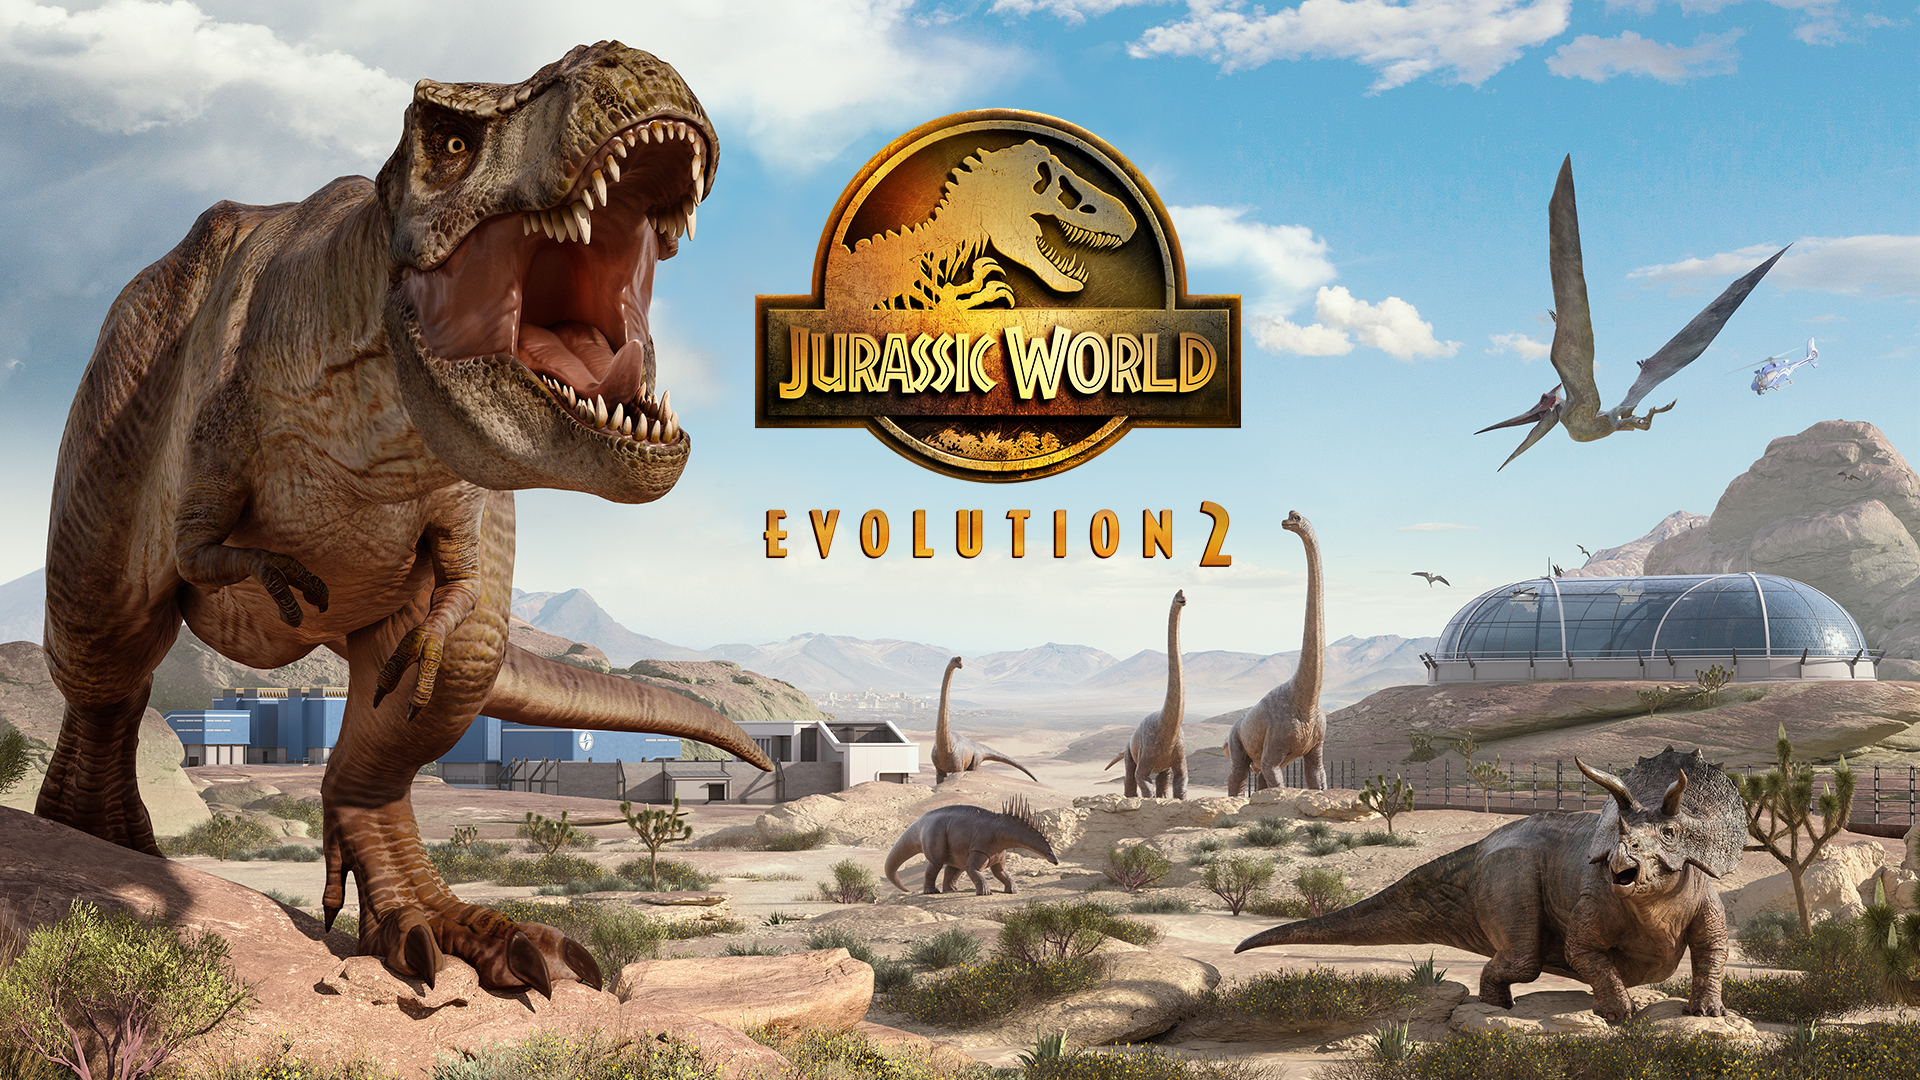 1050864 descargar imagen jurassic world evolution 2, videojuego: fondos de pantalla y protectores de pantalla gratis